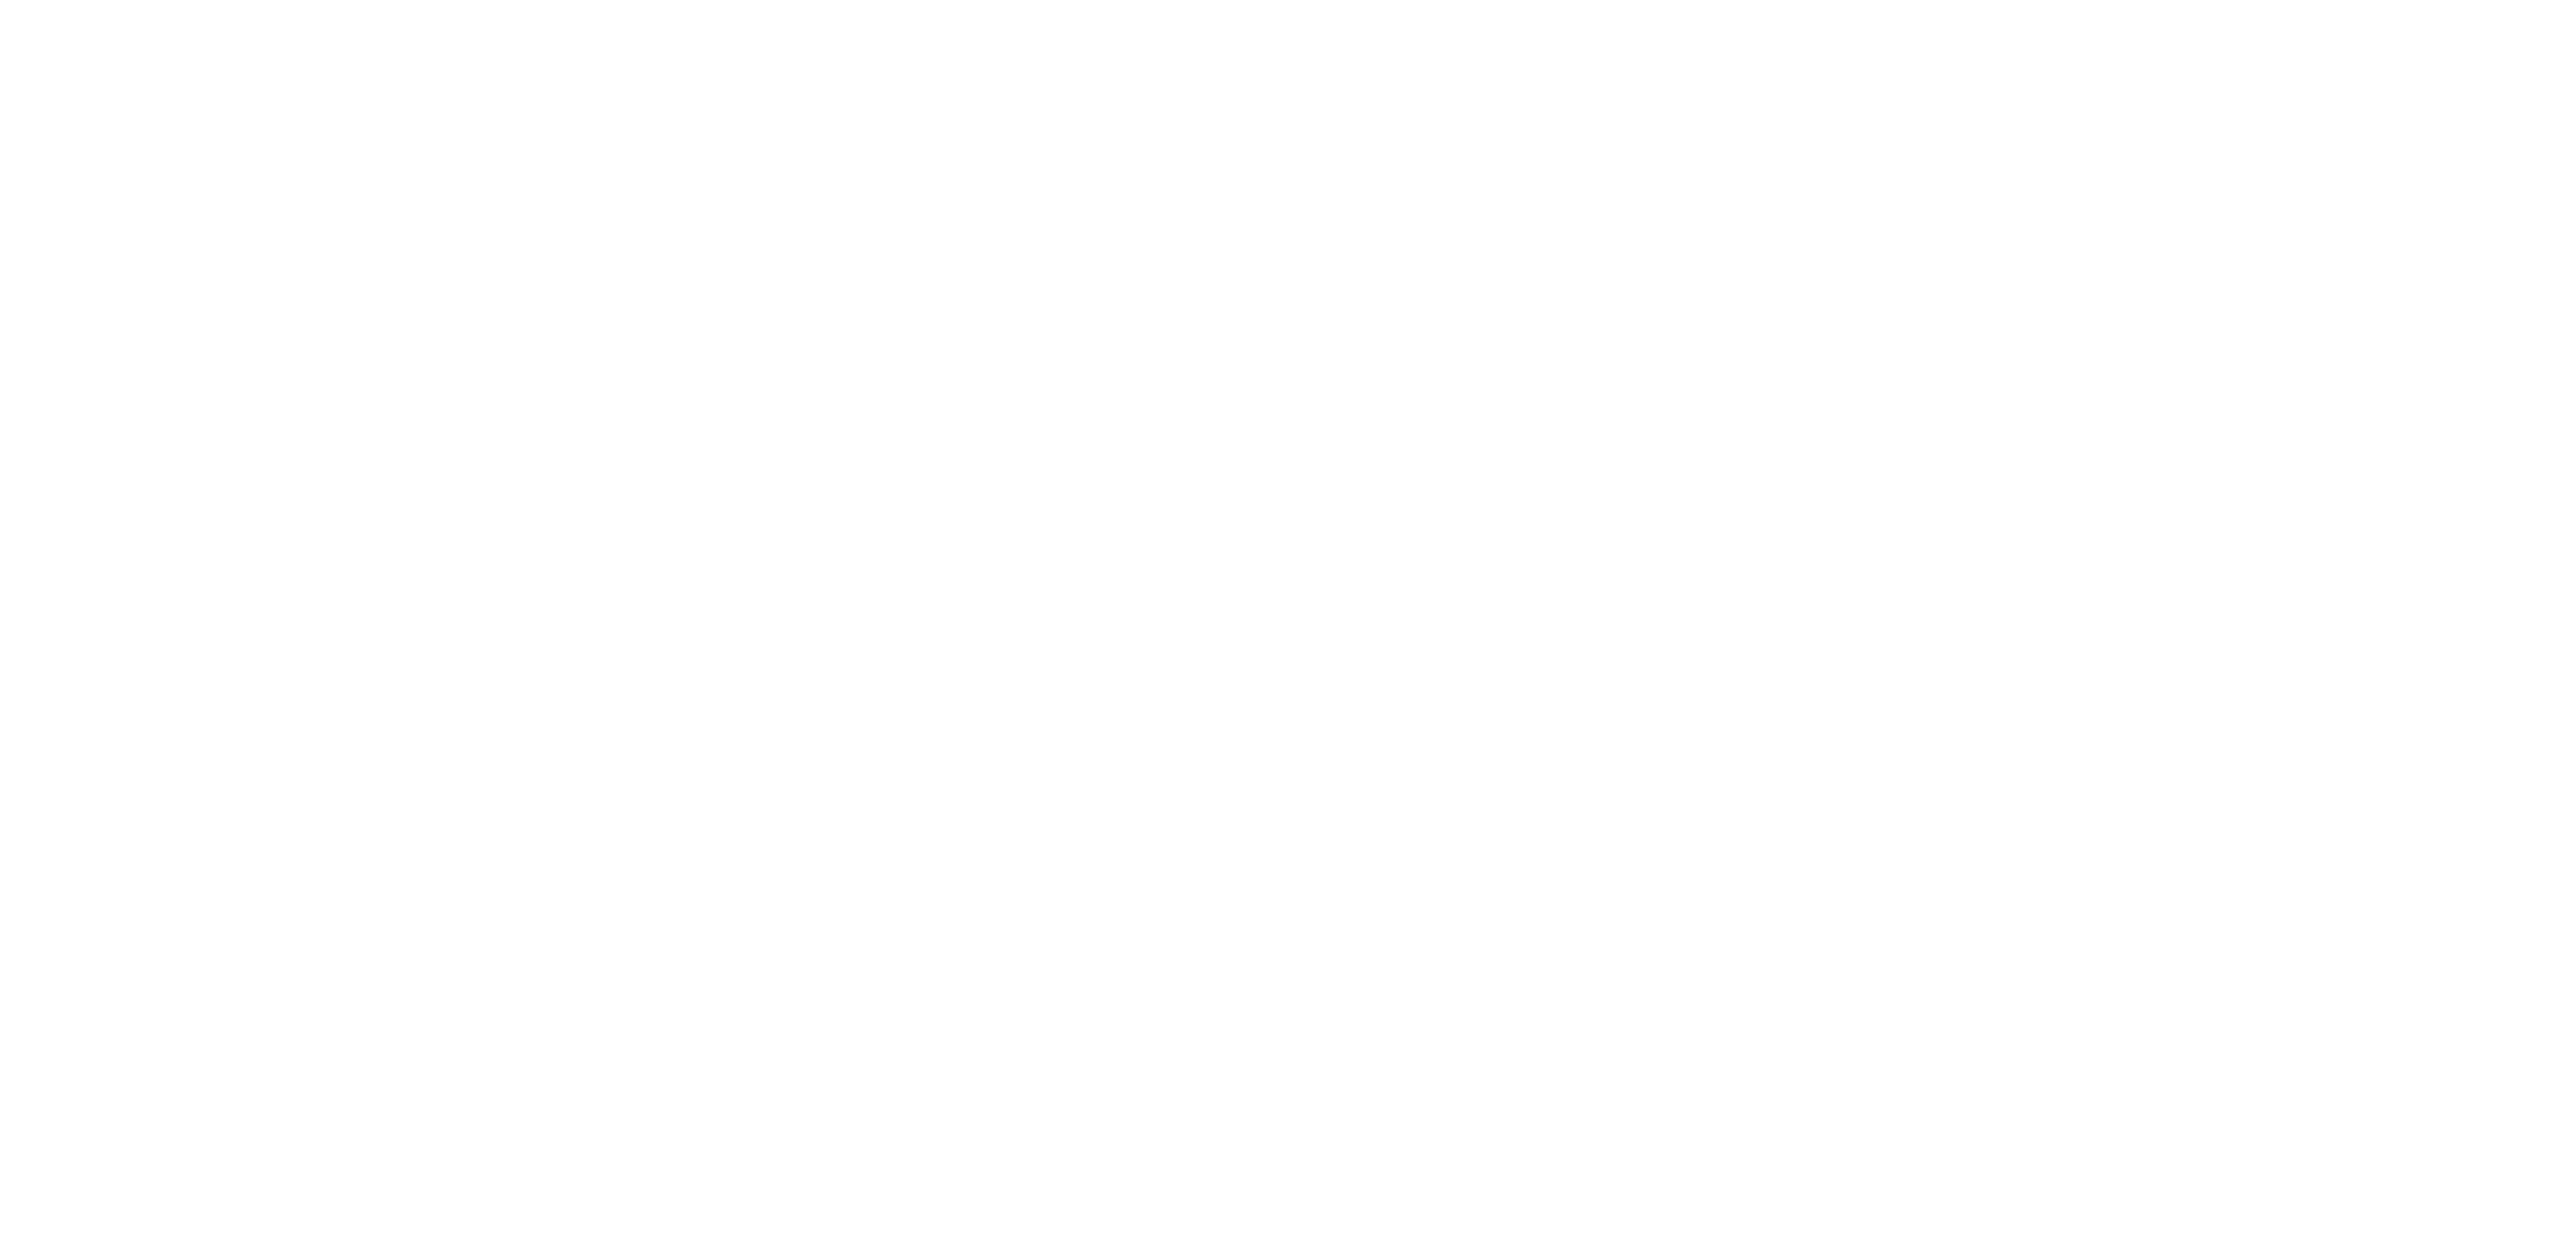 Cyber Sage Insights